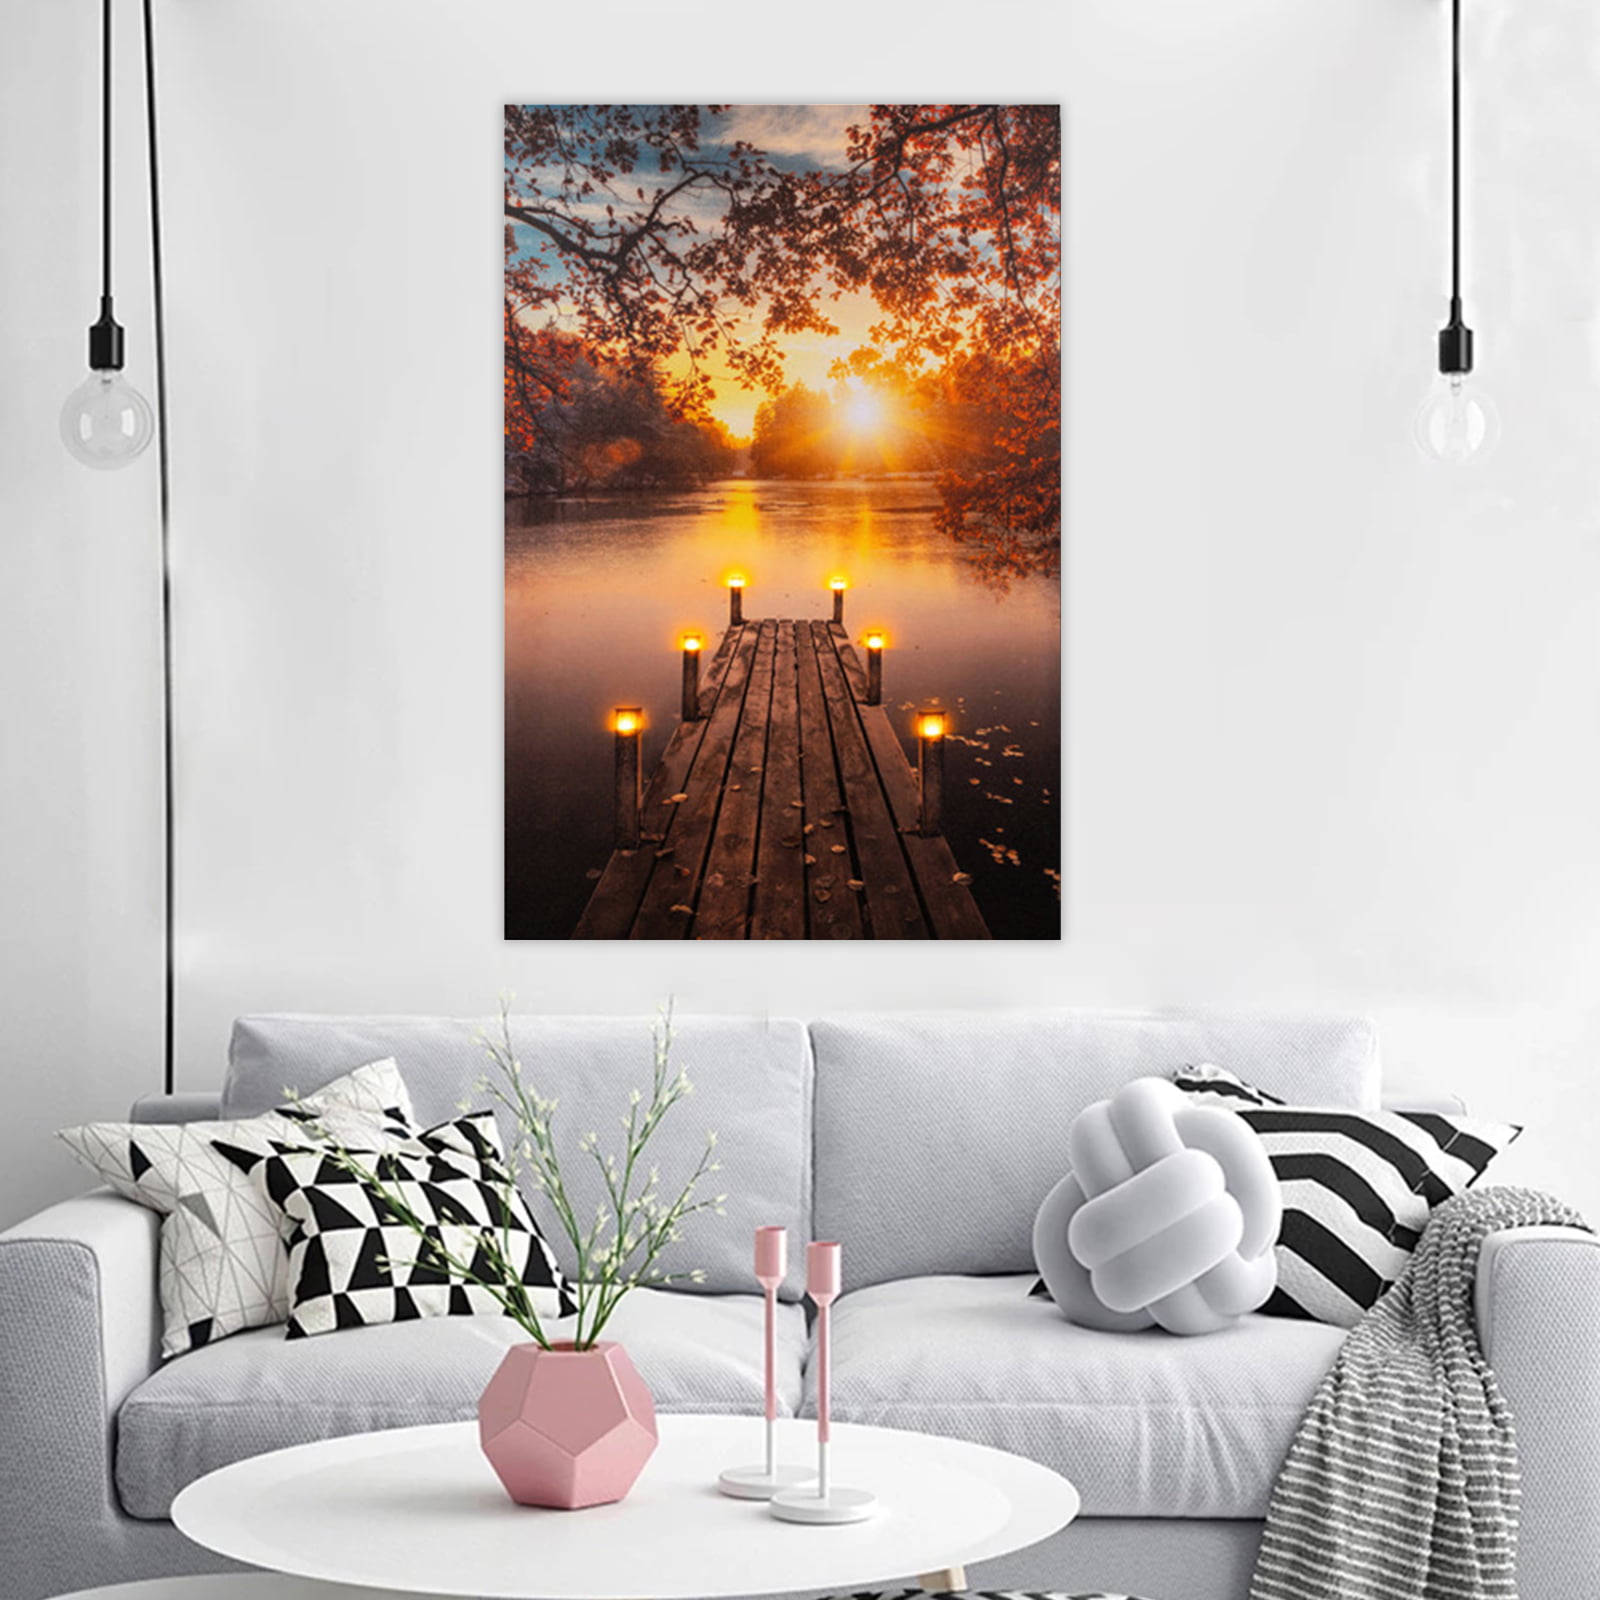 Autumn Avenue Scene LED Canvas 6 Bulb Light Up HD Wall Home Decor Picture  Art